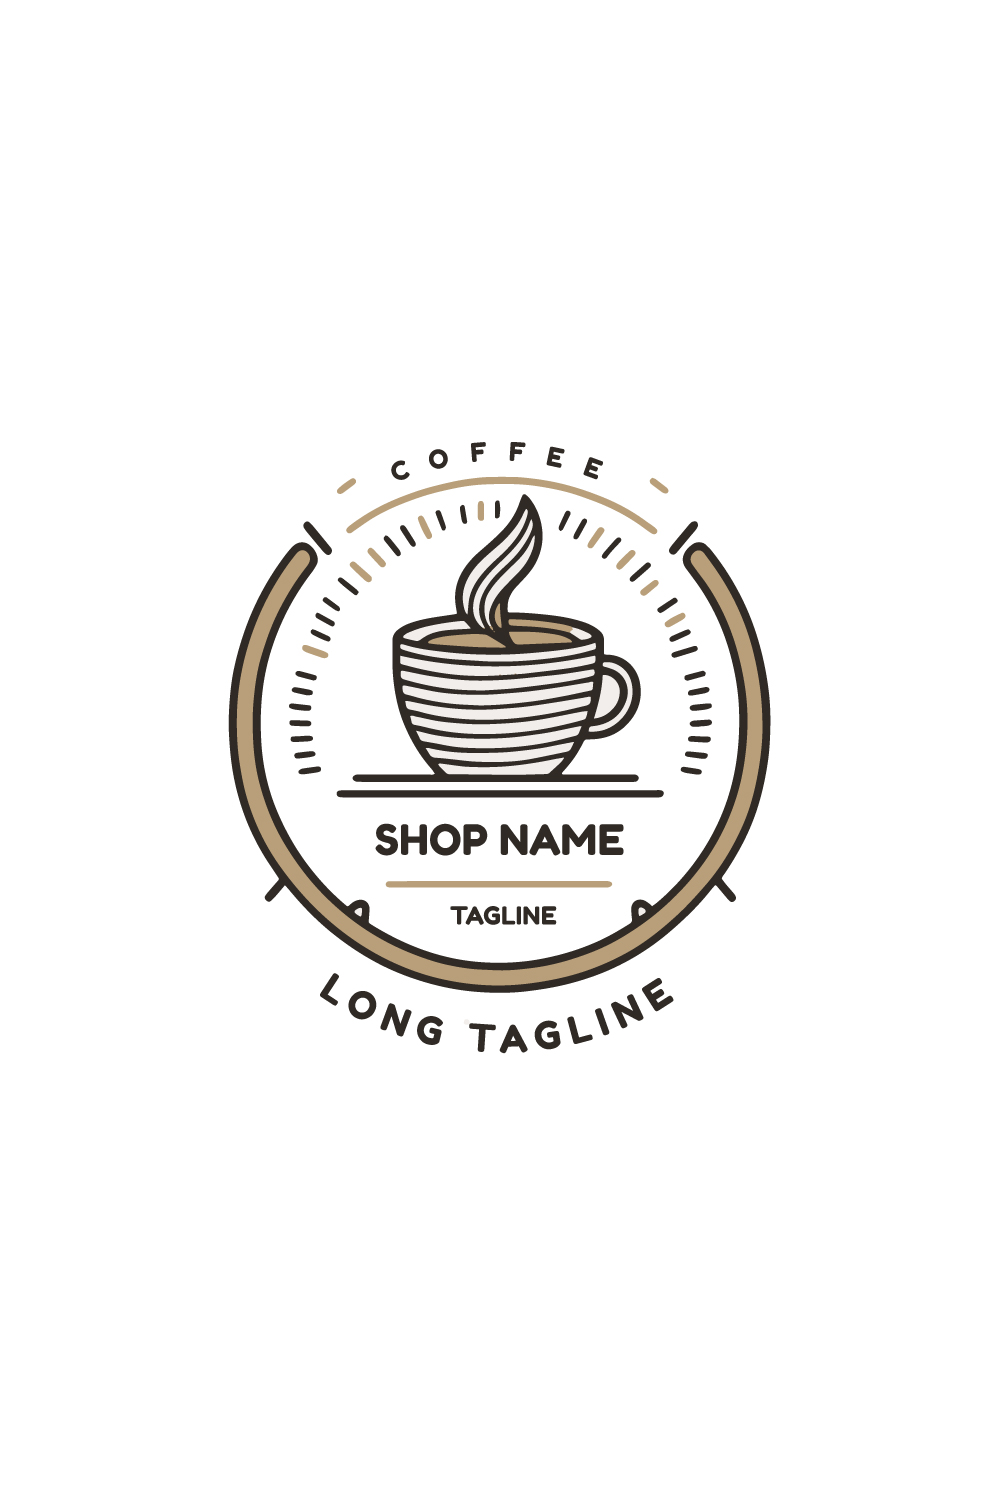 Coffee Shop logo pinterest preview image.